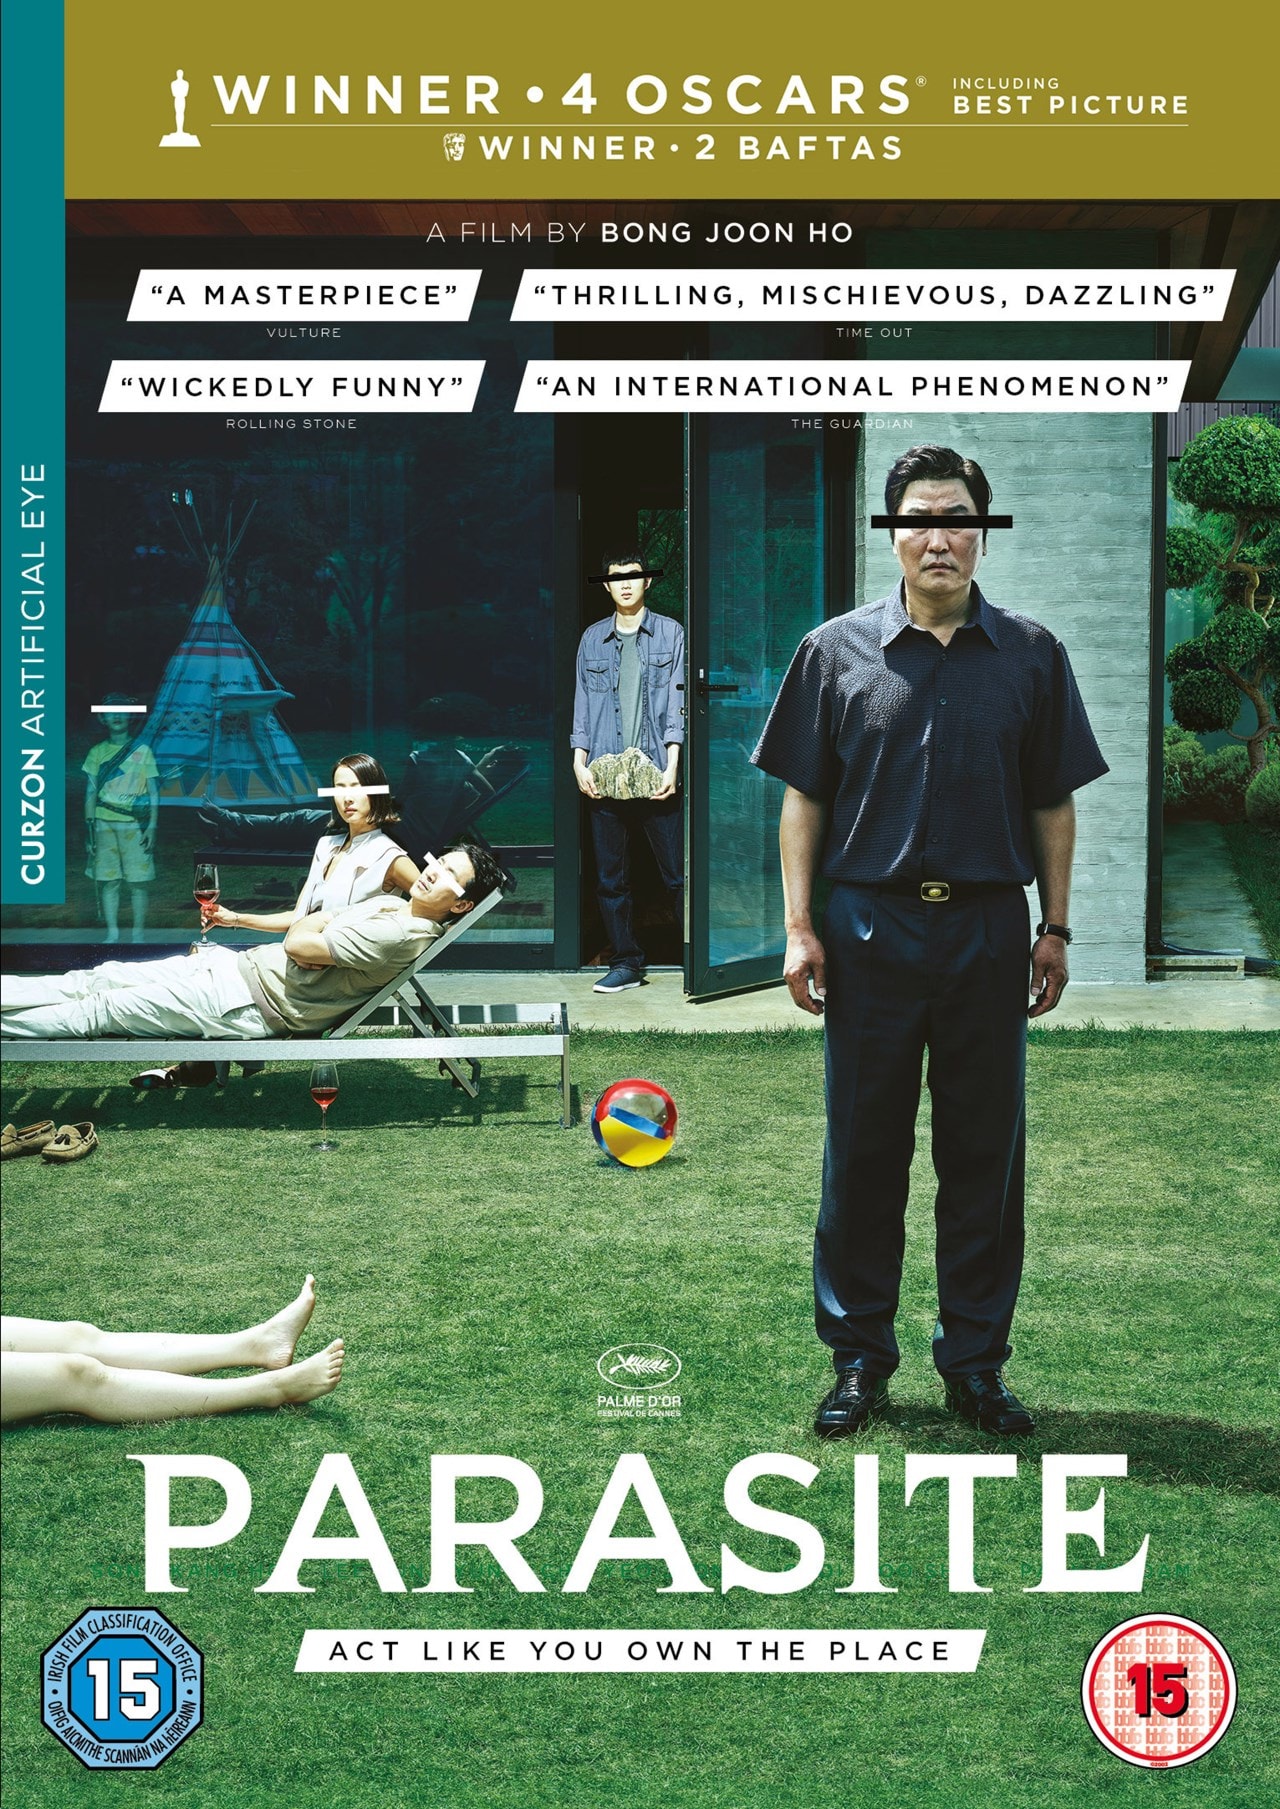 Parasite | DVD | Free shipping over £20 | HMV Store